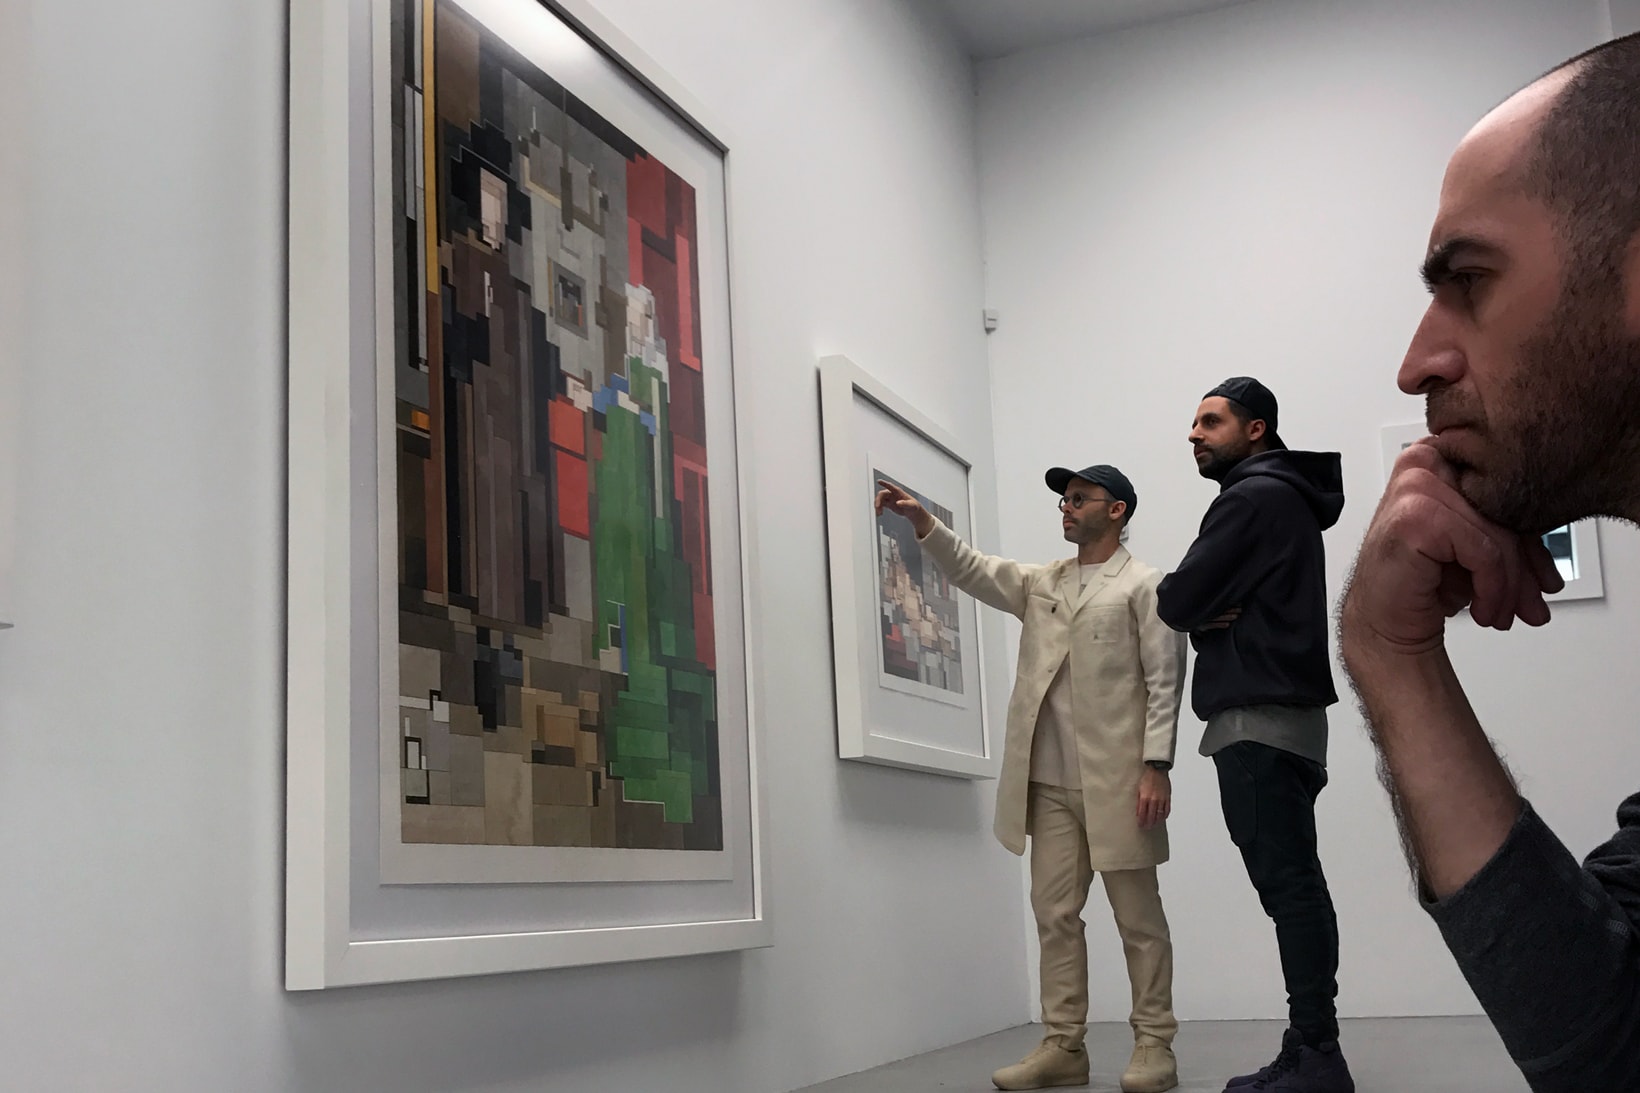 Daniel Arsham Ronnie Fieg Gallery KITH Soho Adam Lister Configuration Art Display Exhibit